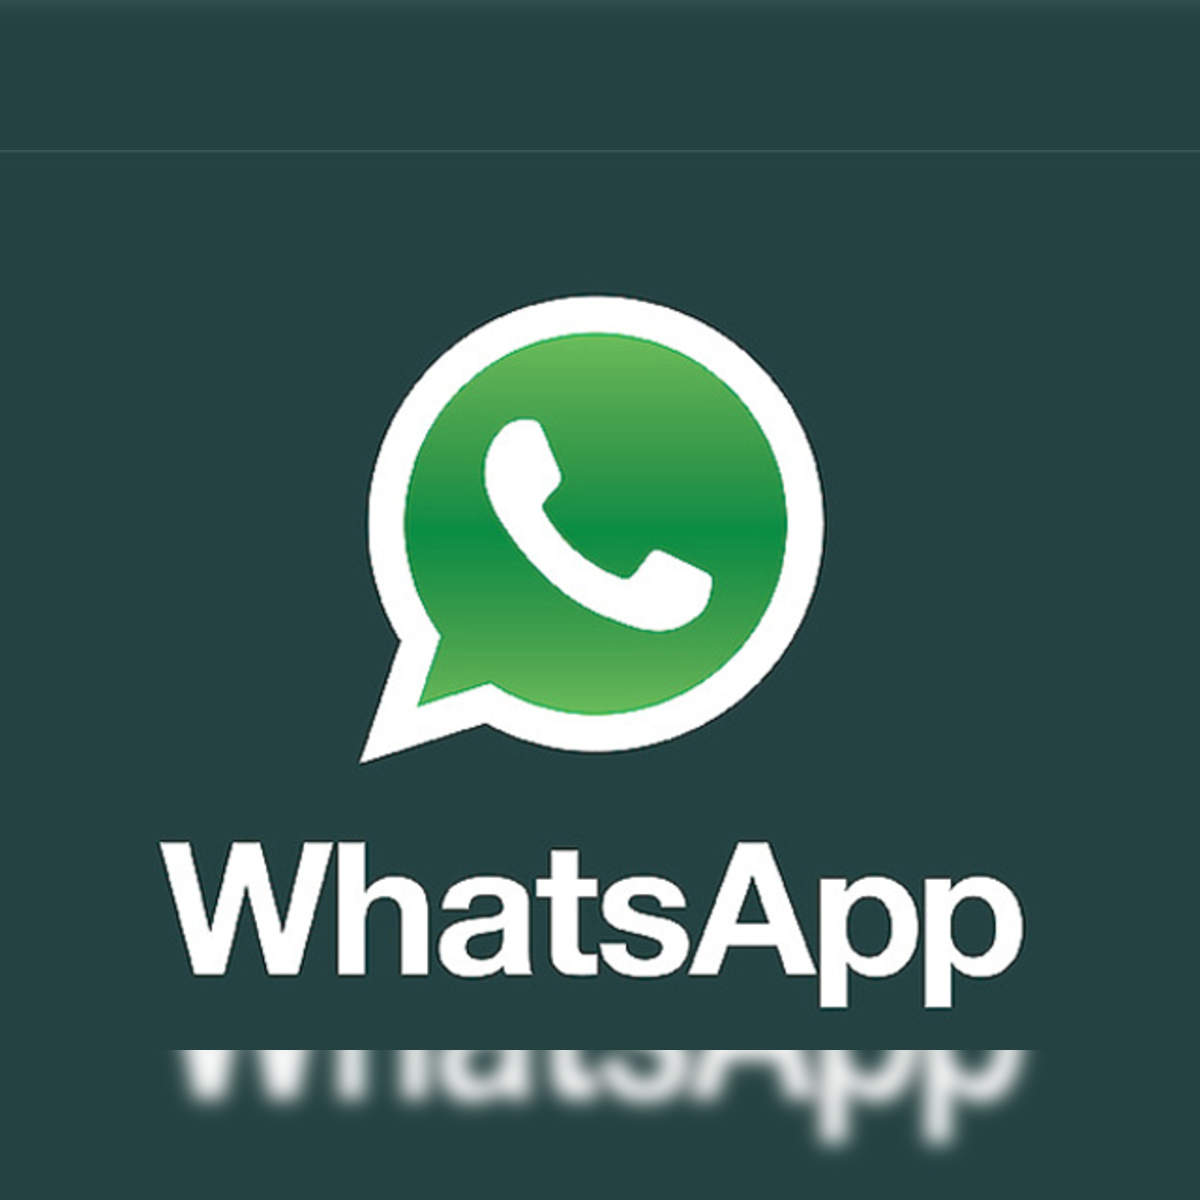 whatsapp png logo - PNGBUY